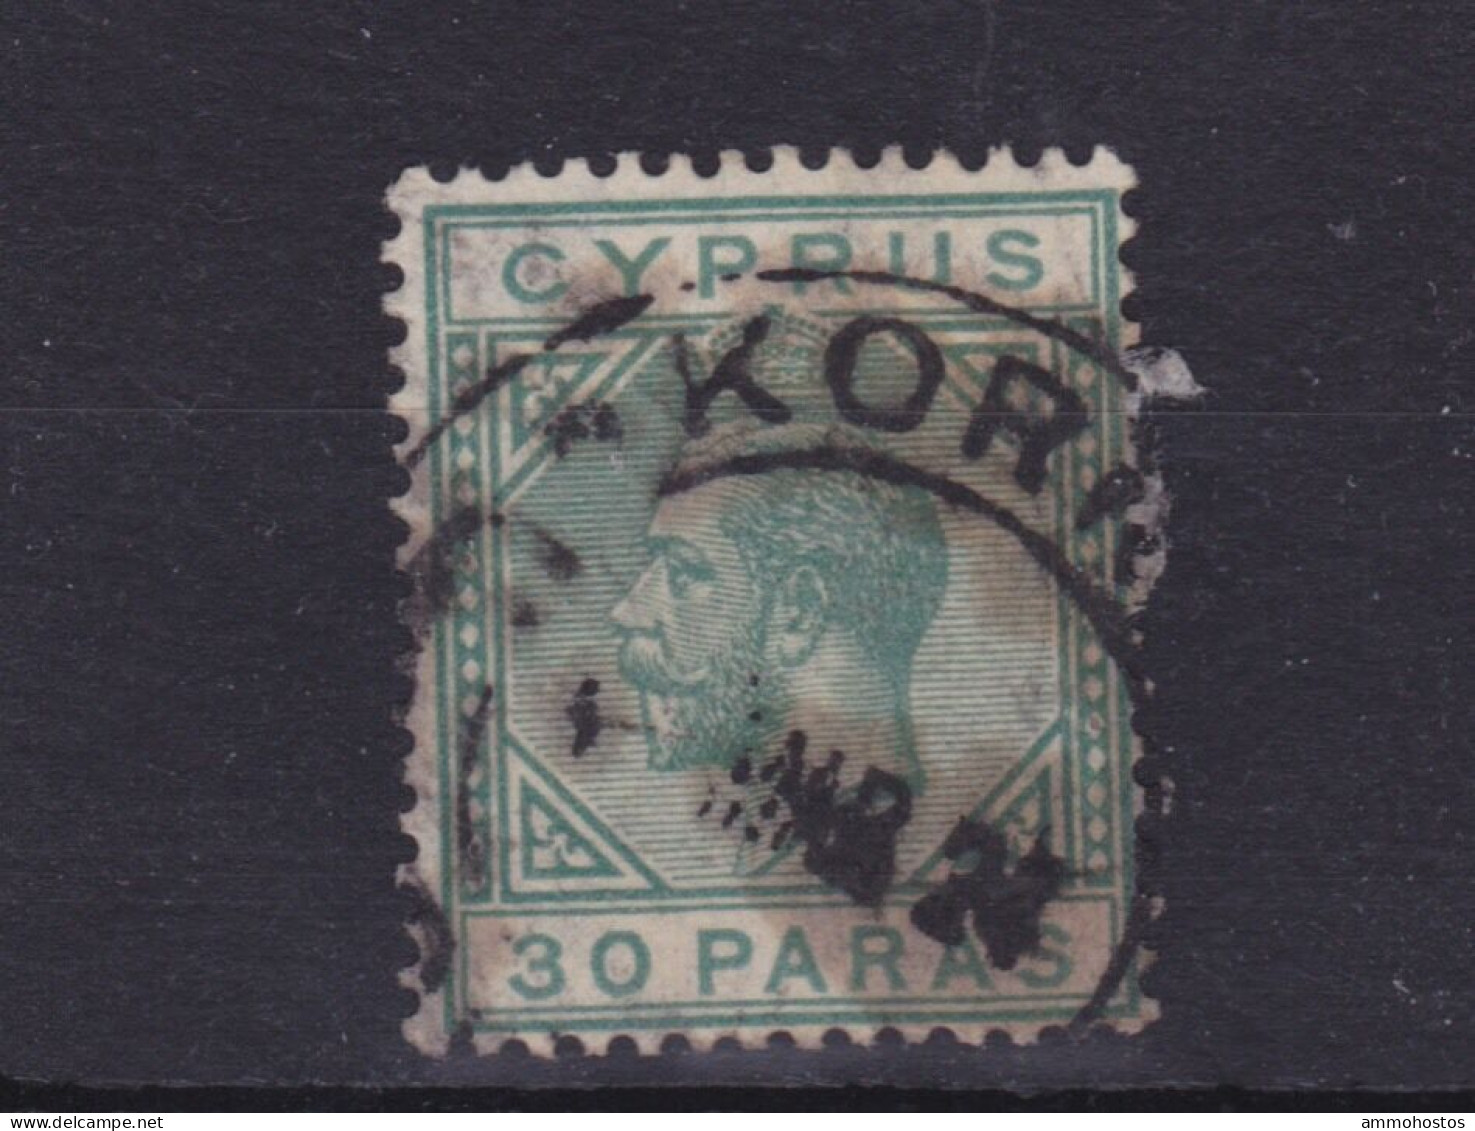 CYPRUS KGV KORNOS RARE RURAL POSTMARK 1924 RARE - Chypre (...-1960)